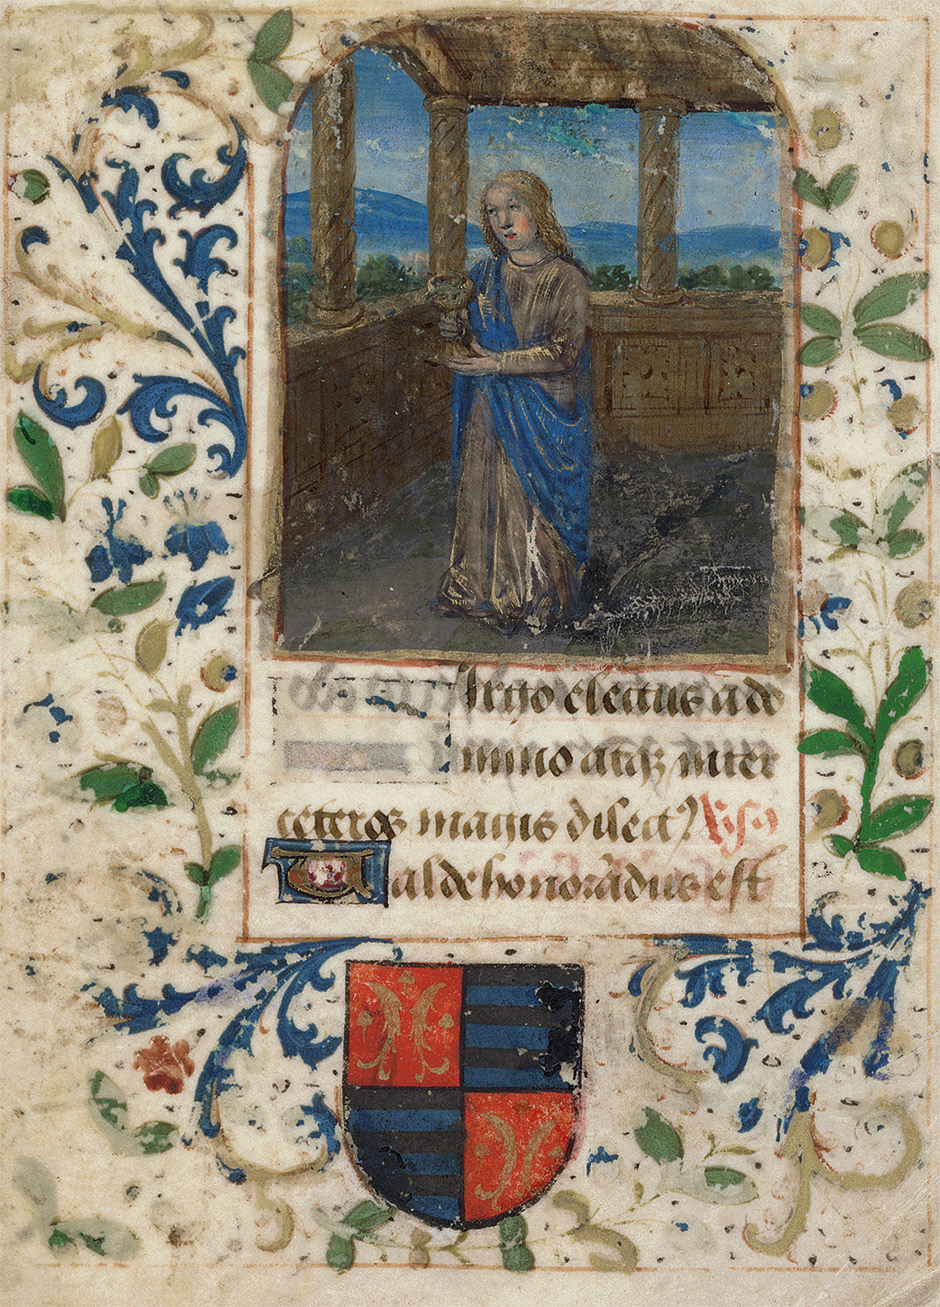 Lot 1004, Auction  115, Horae Beatae Mariae Virginis, Stundenbuchfragment. Frankreich um 1465